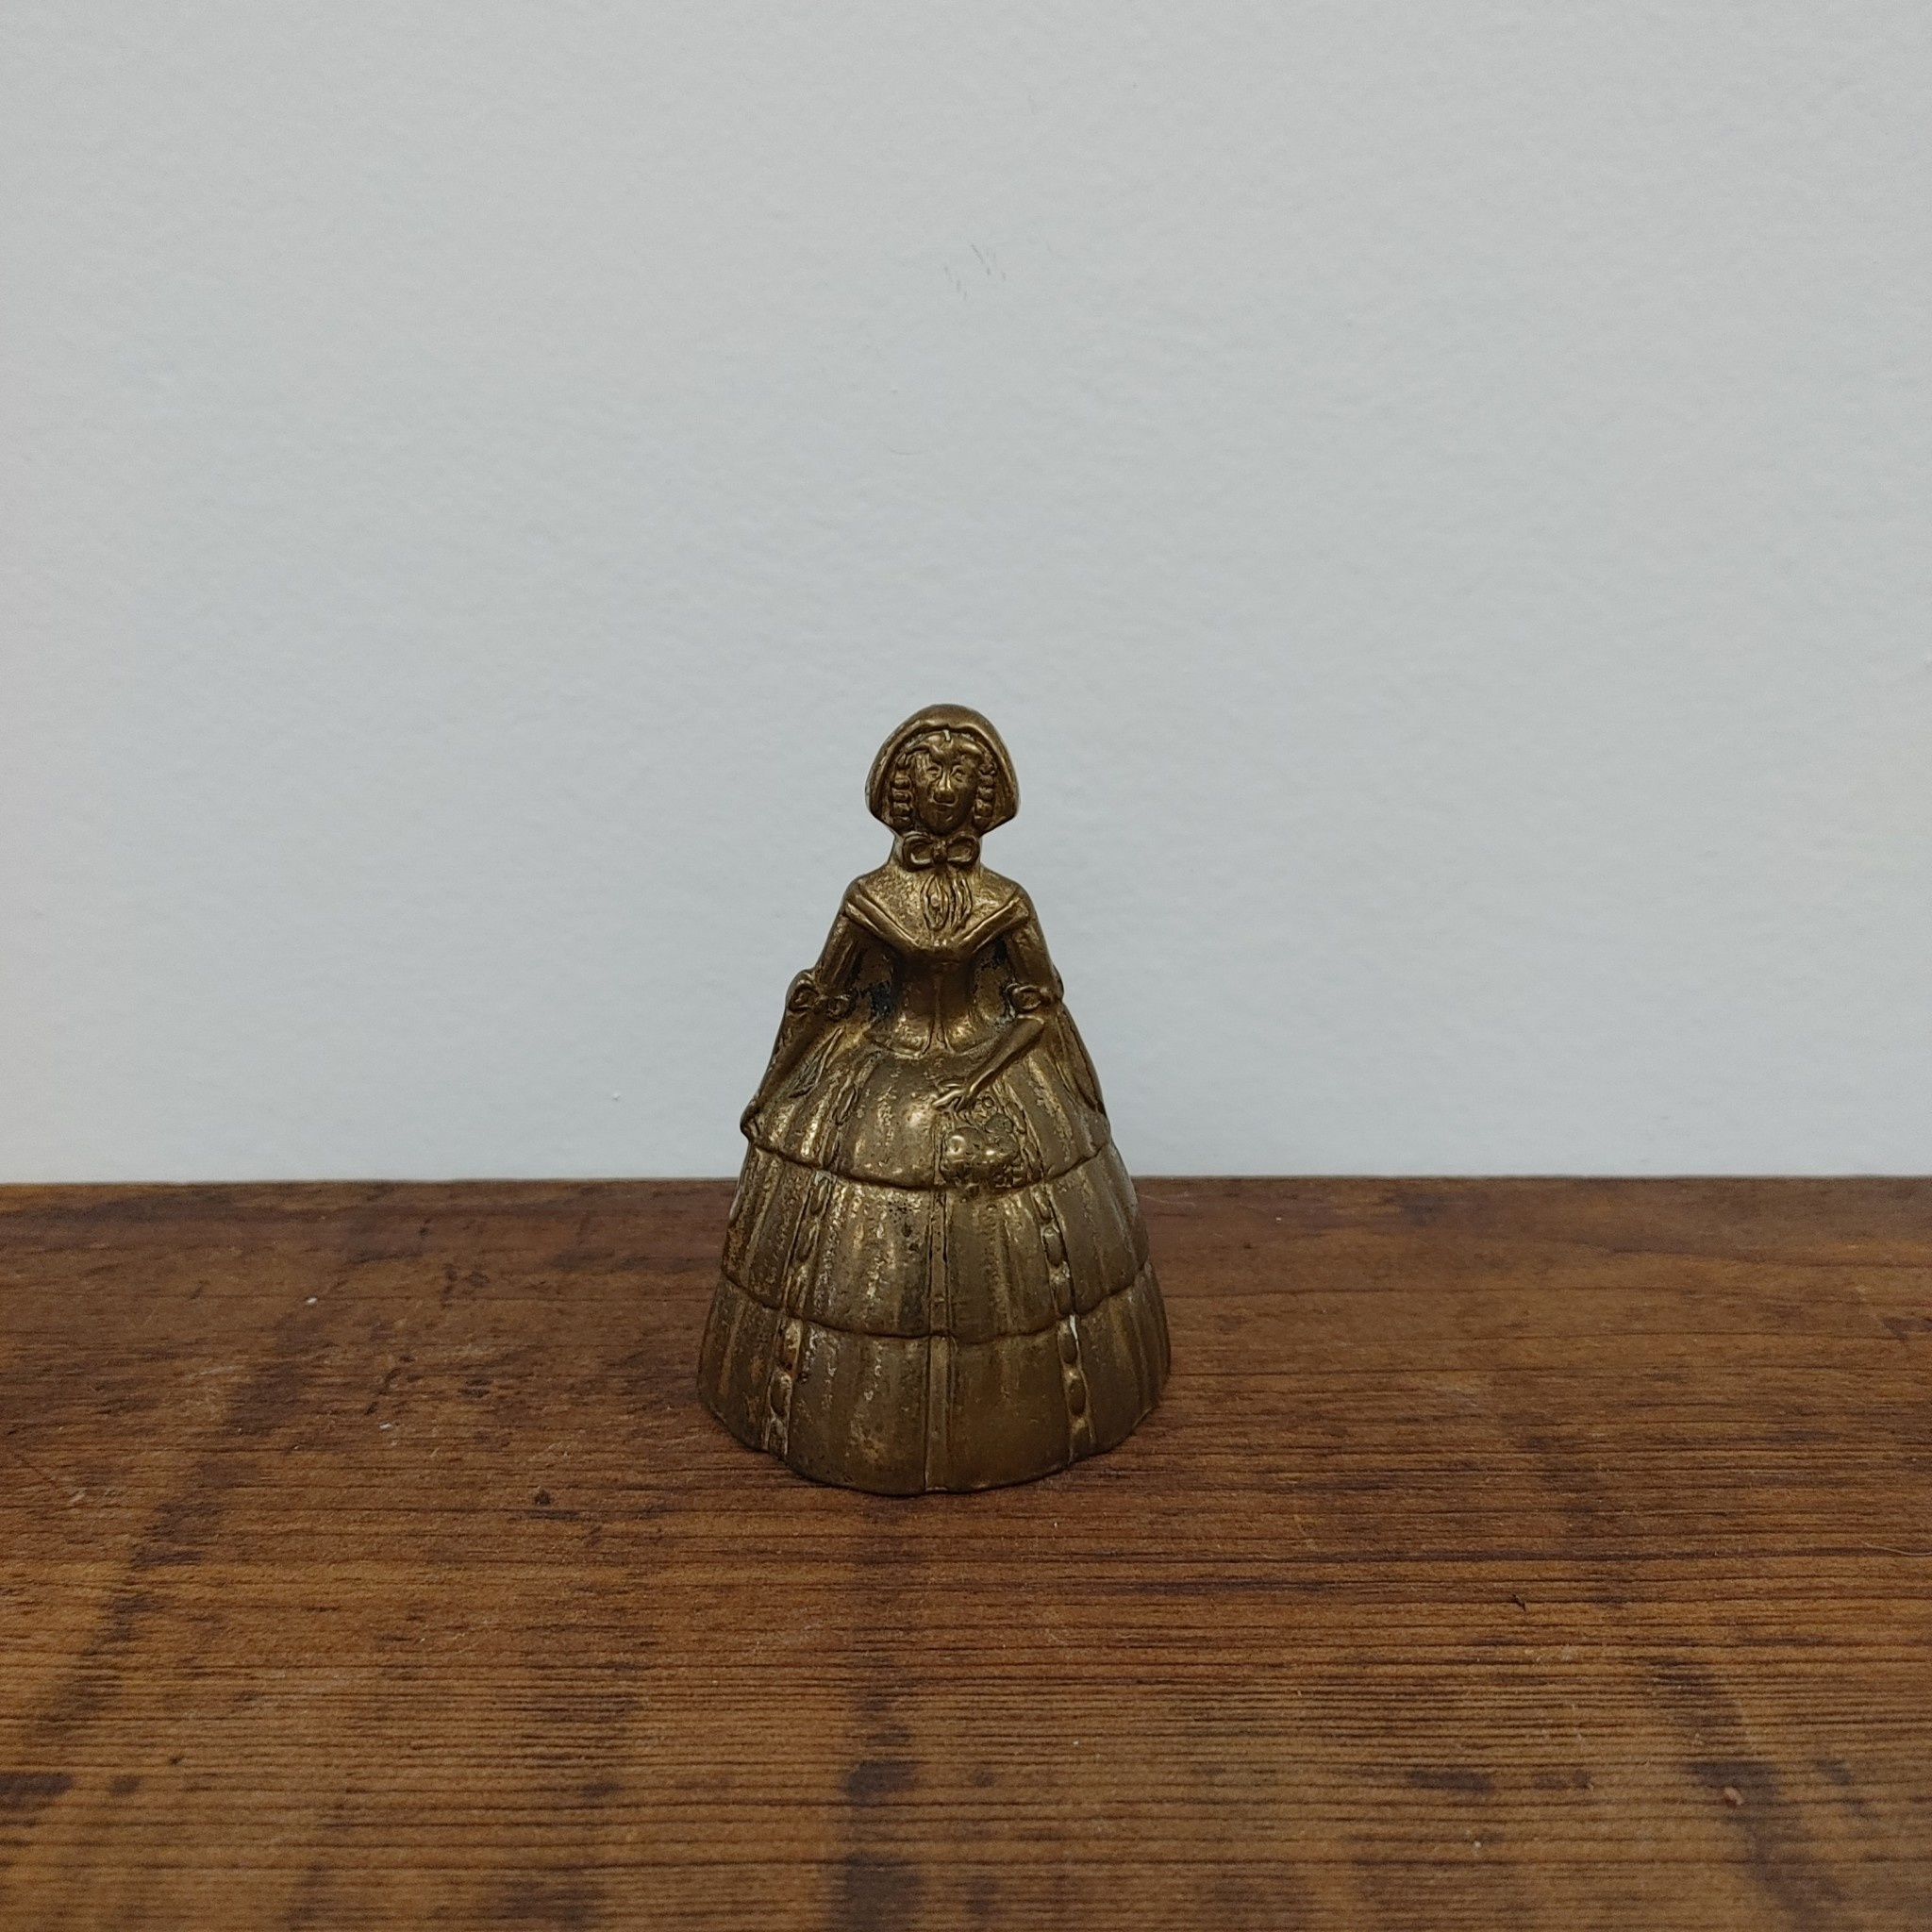 Antique Solid Brass Dutch Girl/Victorian Woman Bell